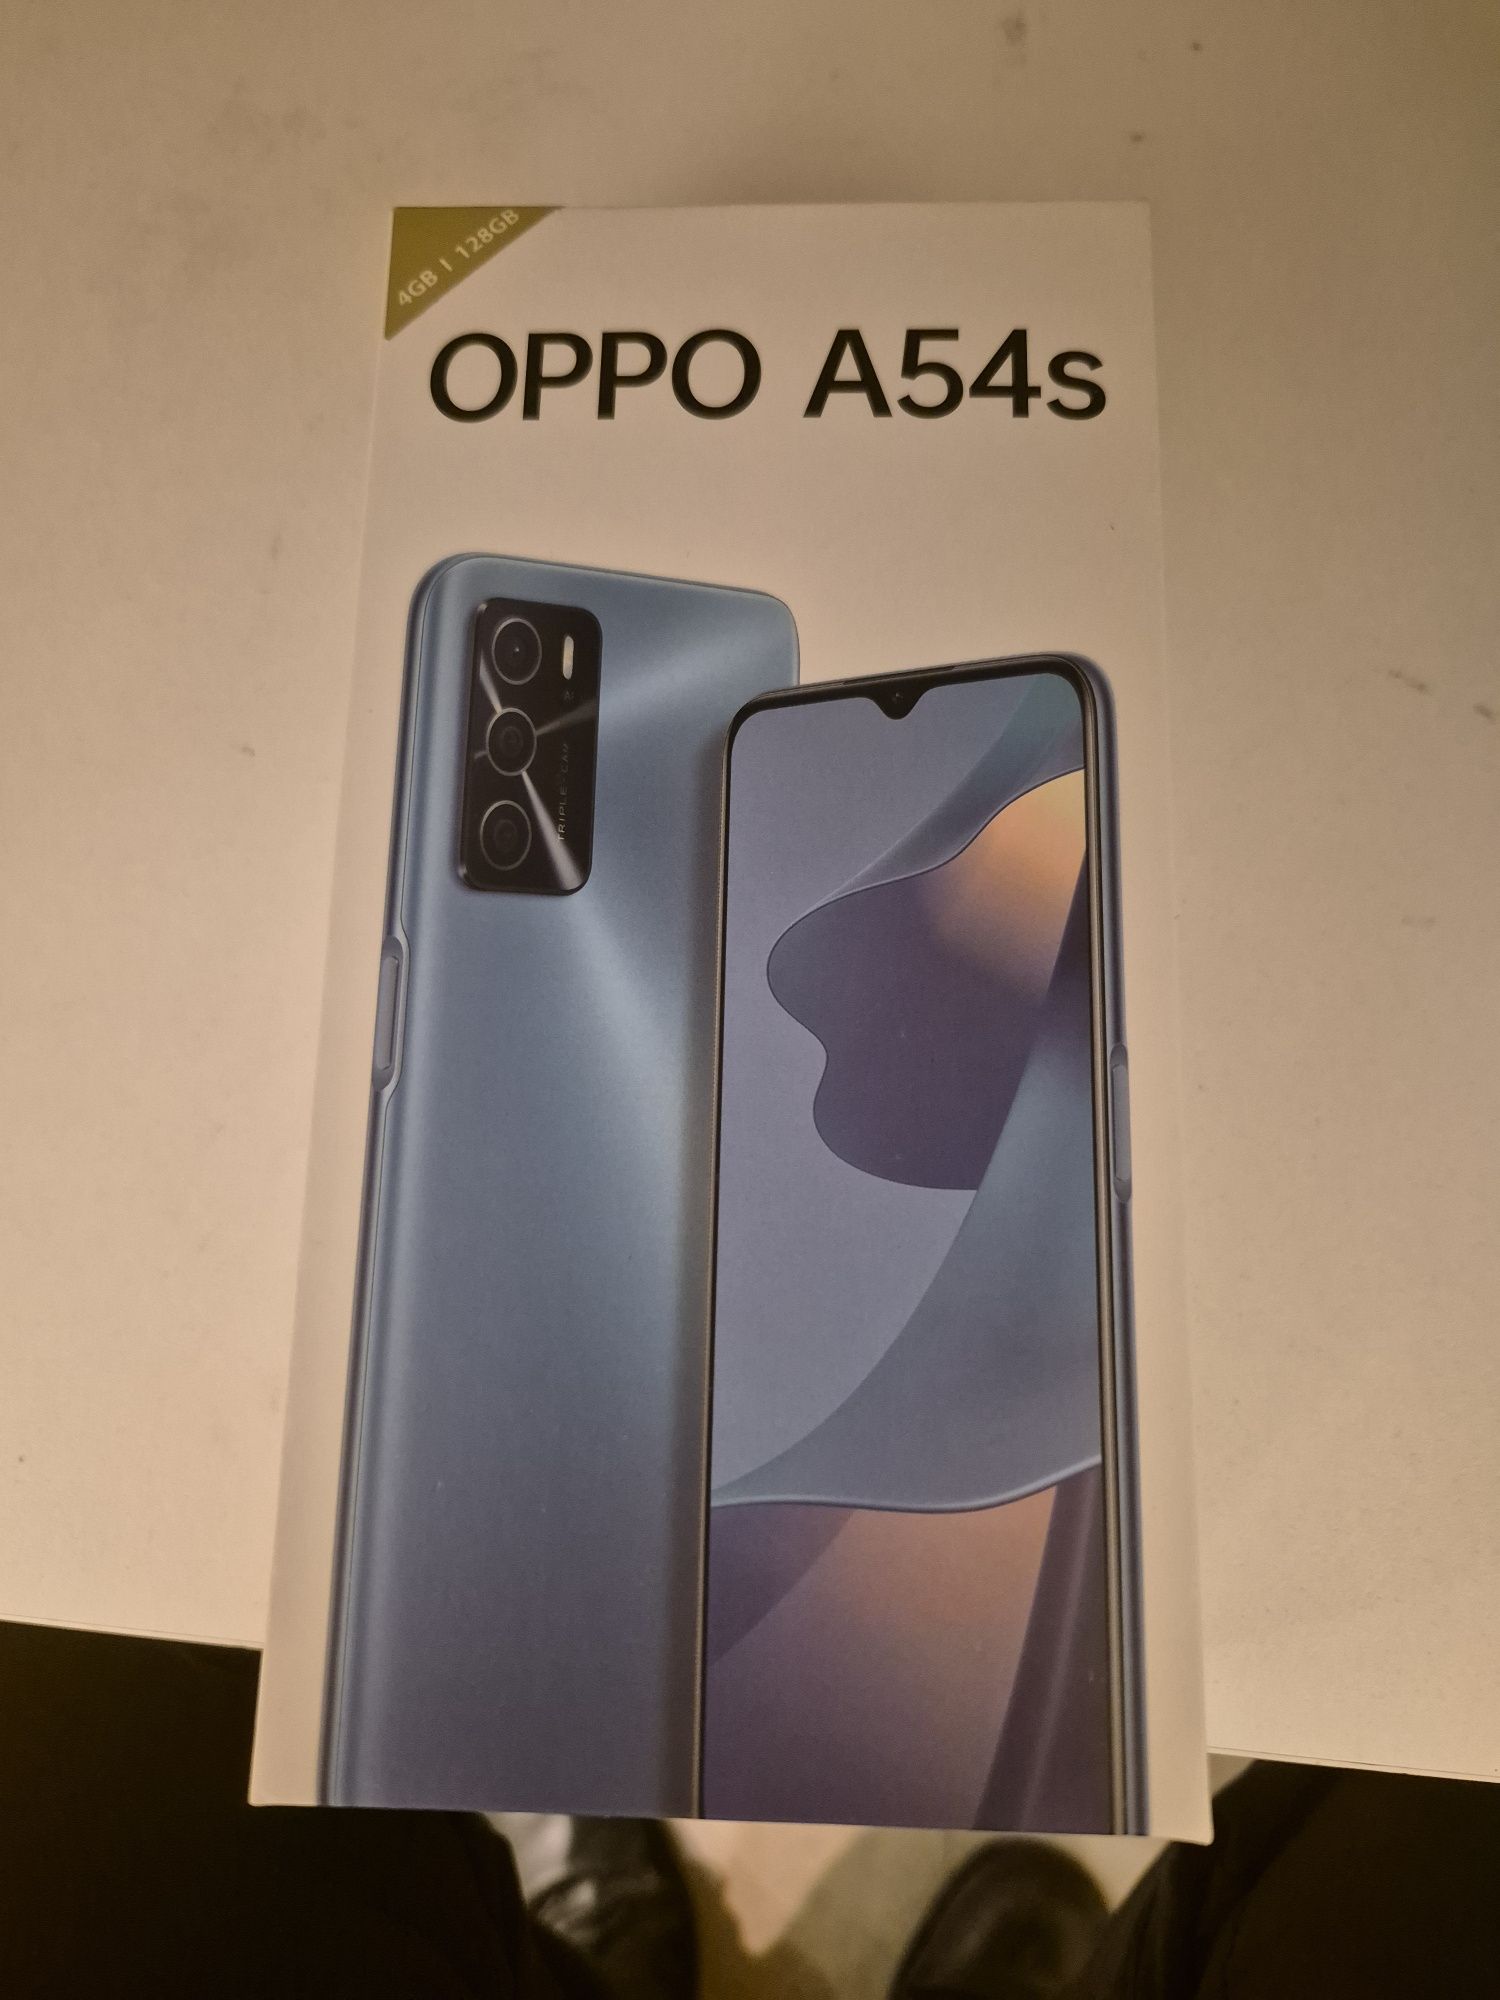 Vendo telemóvel OPPO A54s